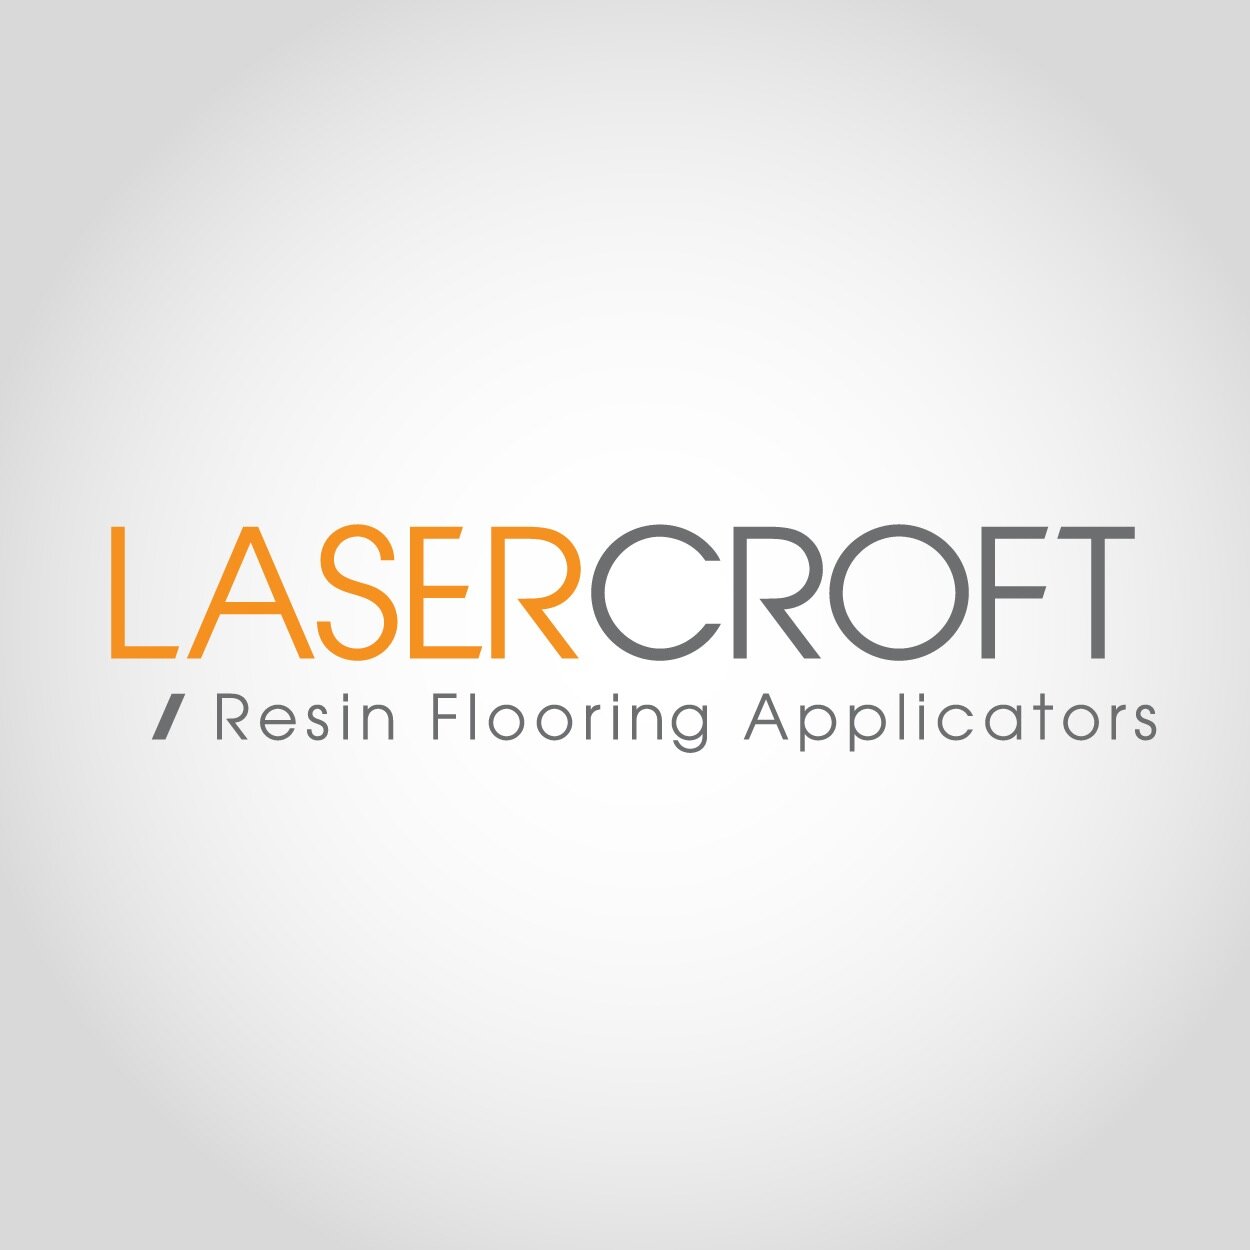 Lasercroft Flooring